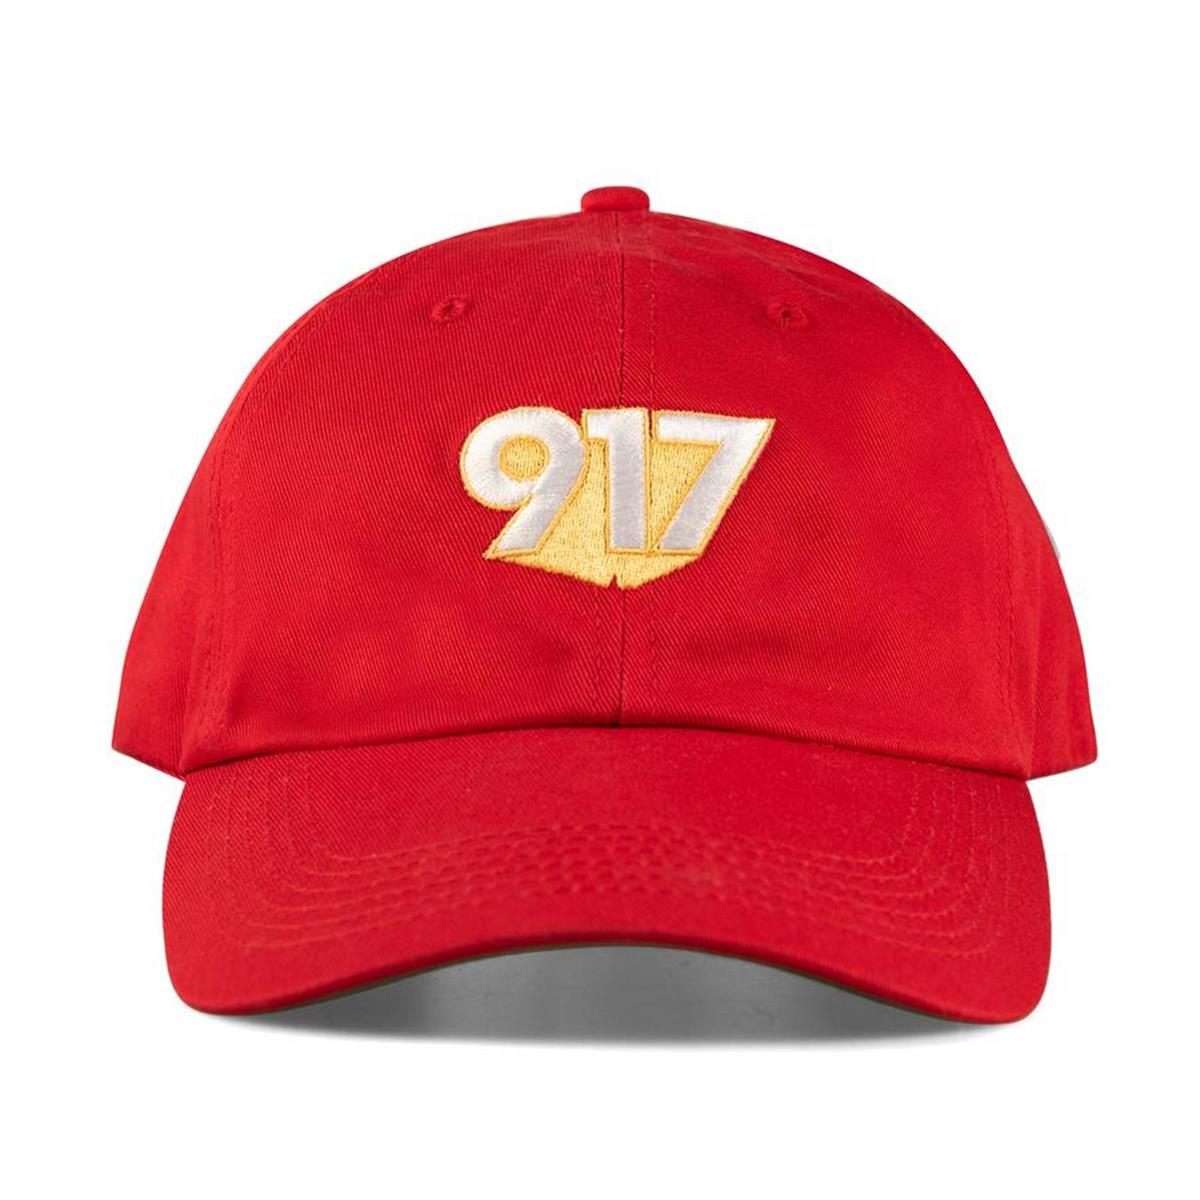 Rufen Sie mich 917 an – 3D-Roter Papa-Hut